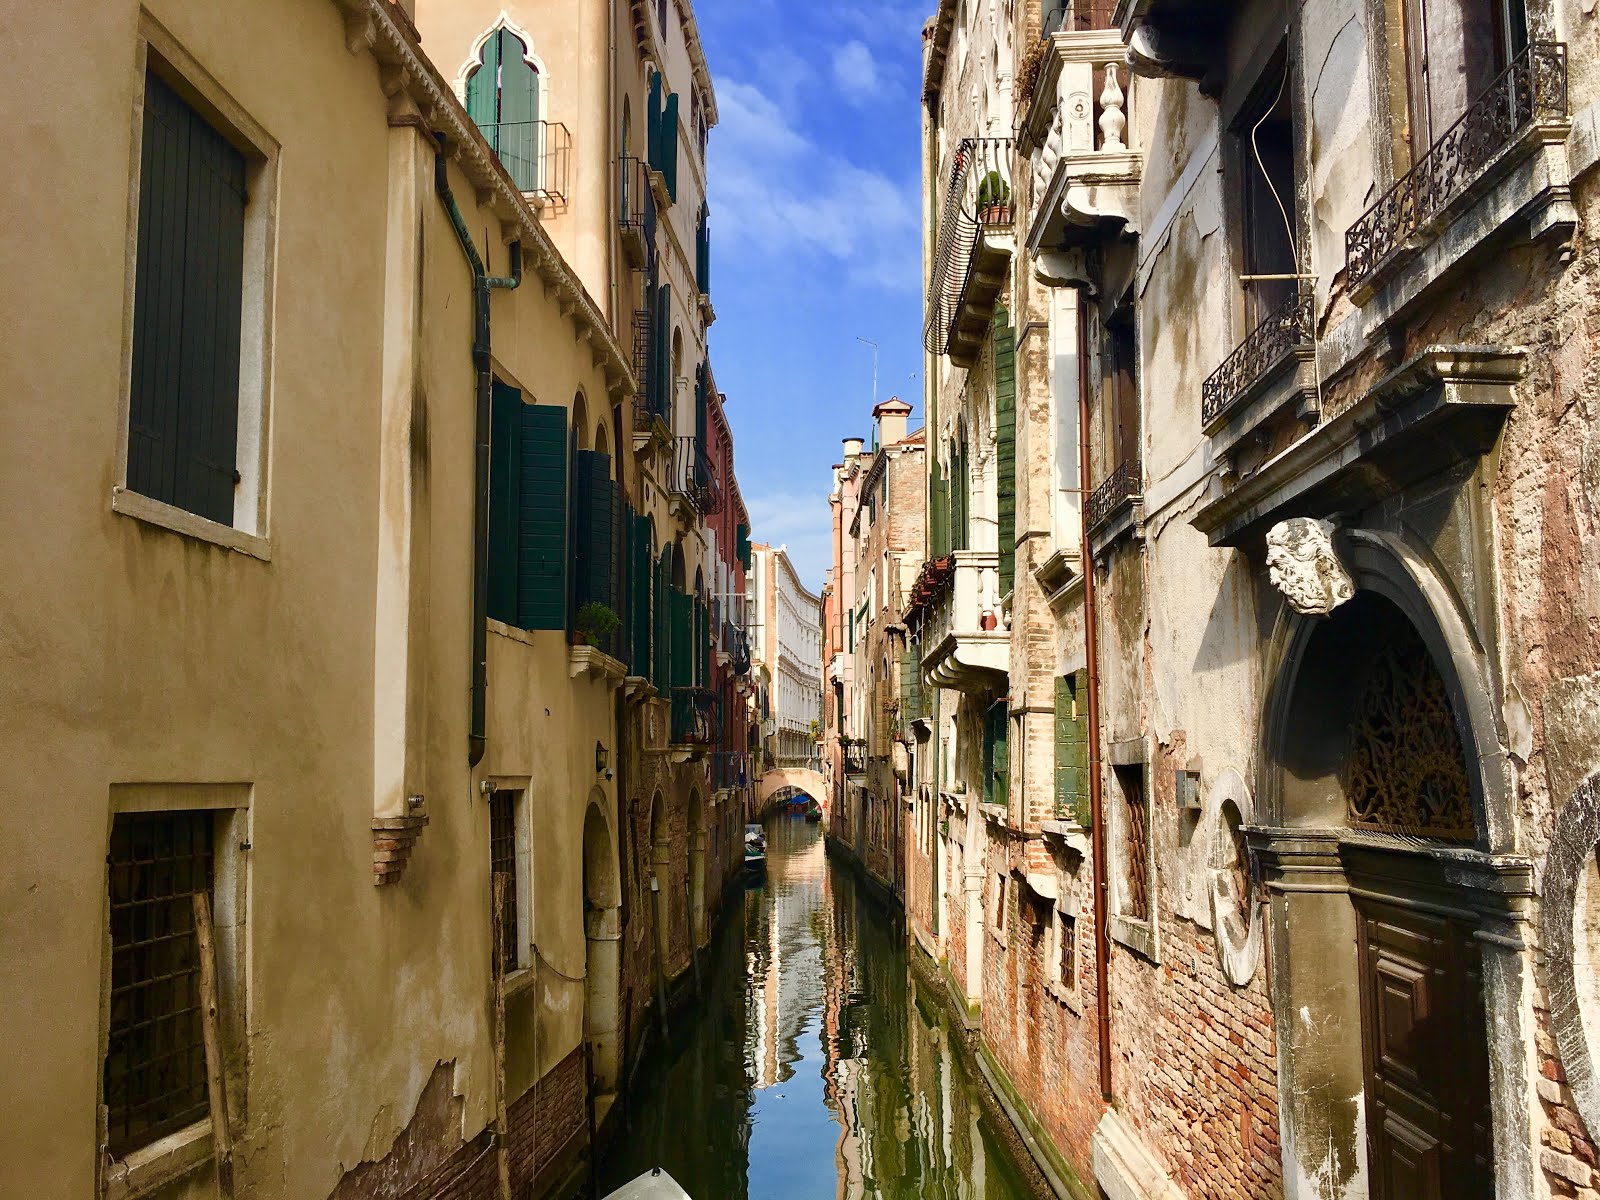 A Venice Waterway